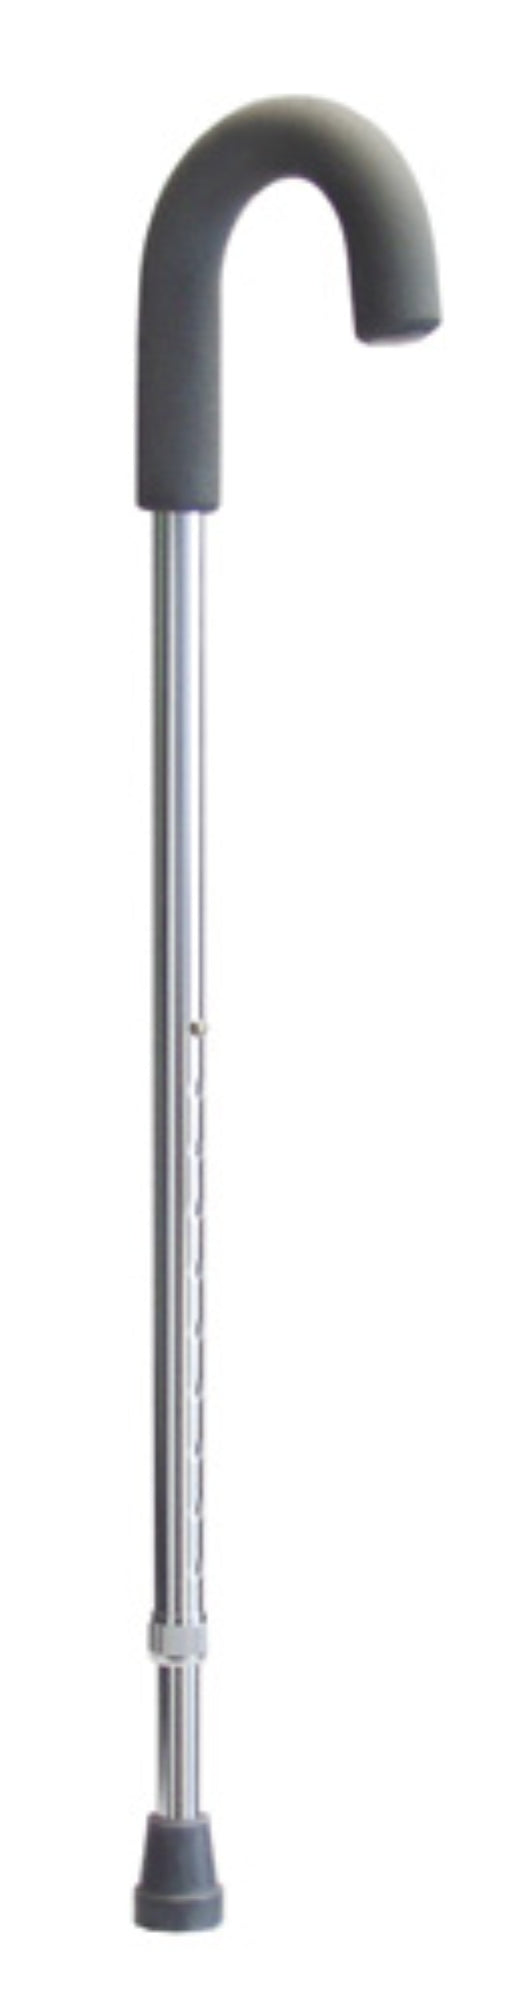 Graham Field Adjustable Aluminum Canes - Soft Grip, 6 Each Per Case